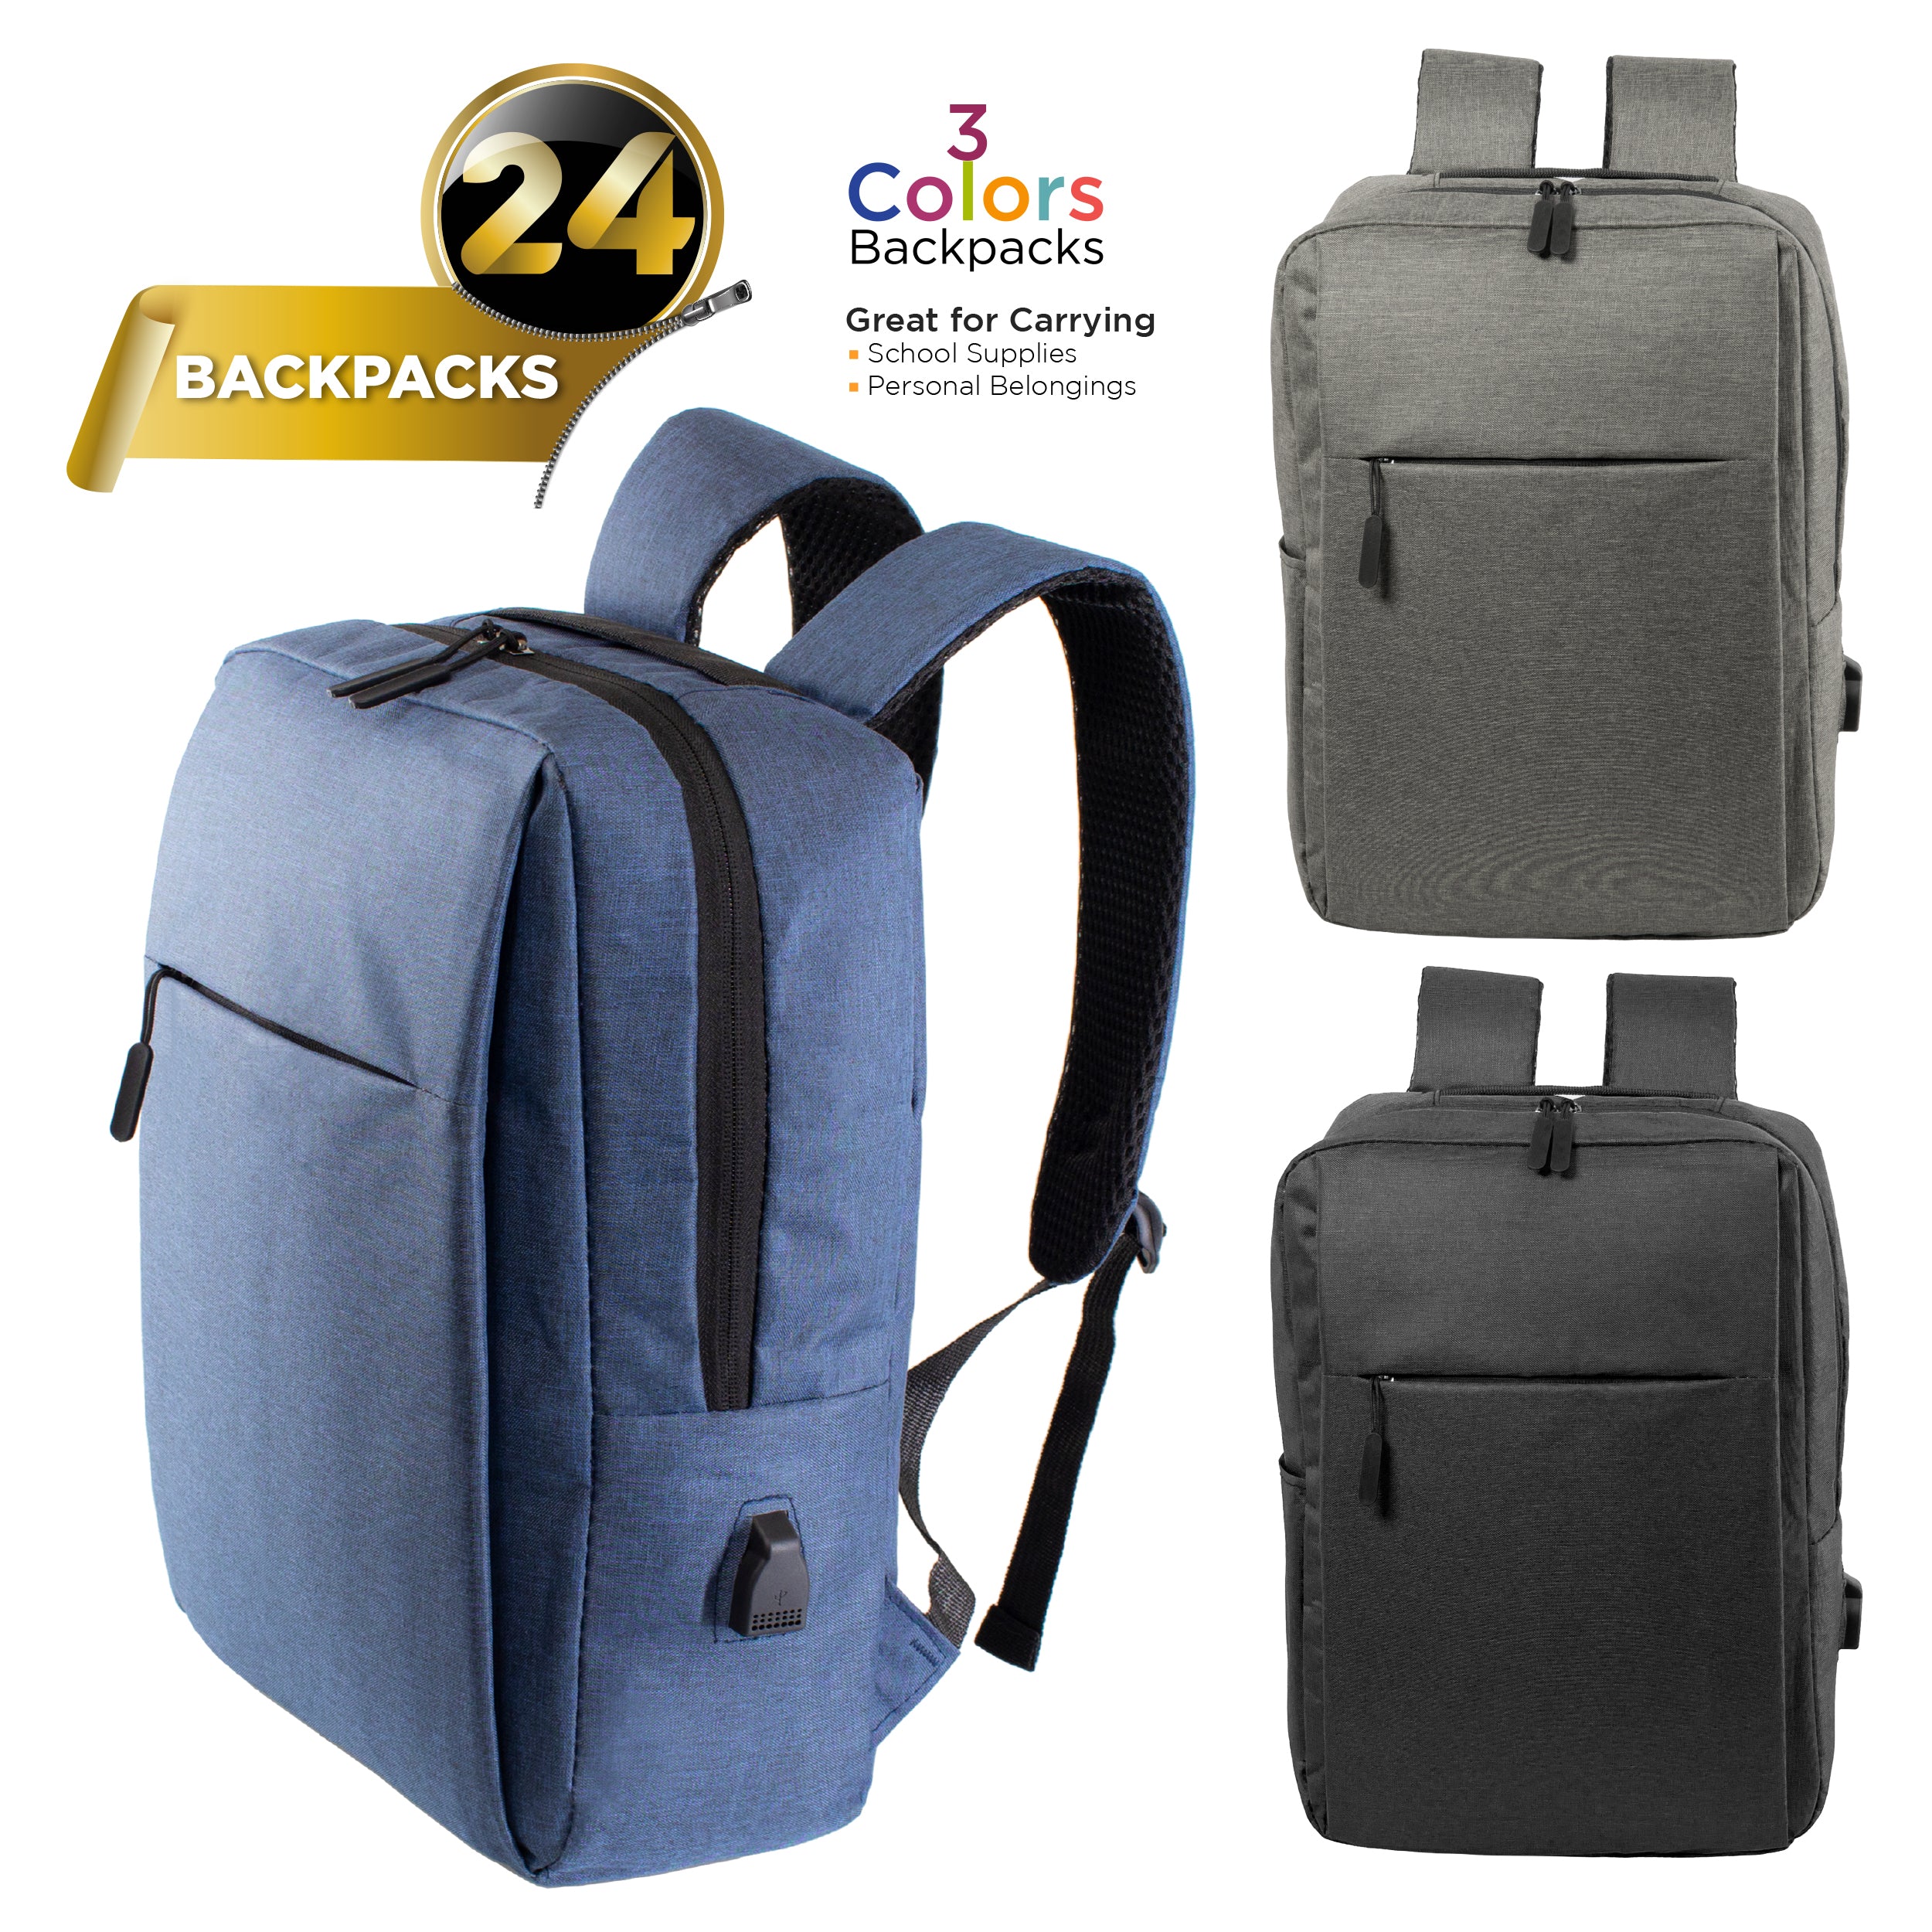 17" Wholesale Premium Design Backpacks in 3 Assorted Colors - Wholesale Bookbags Case of 24